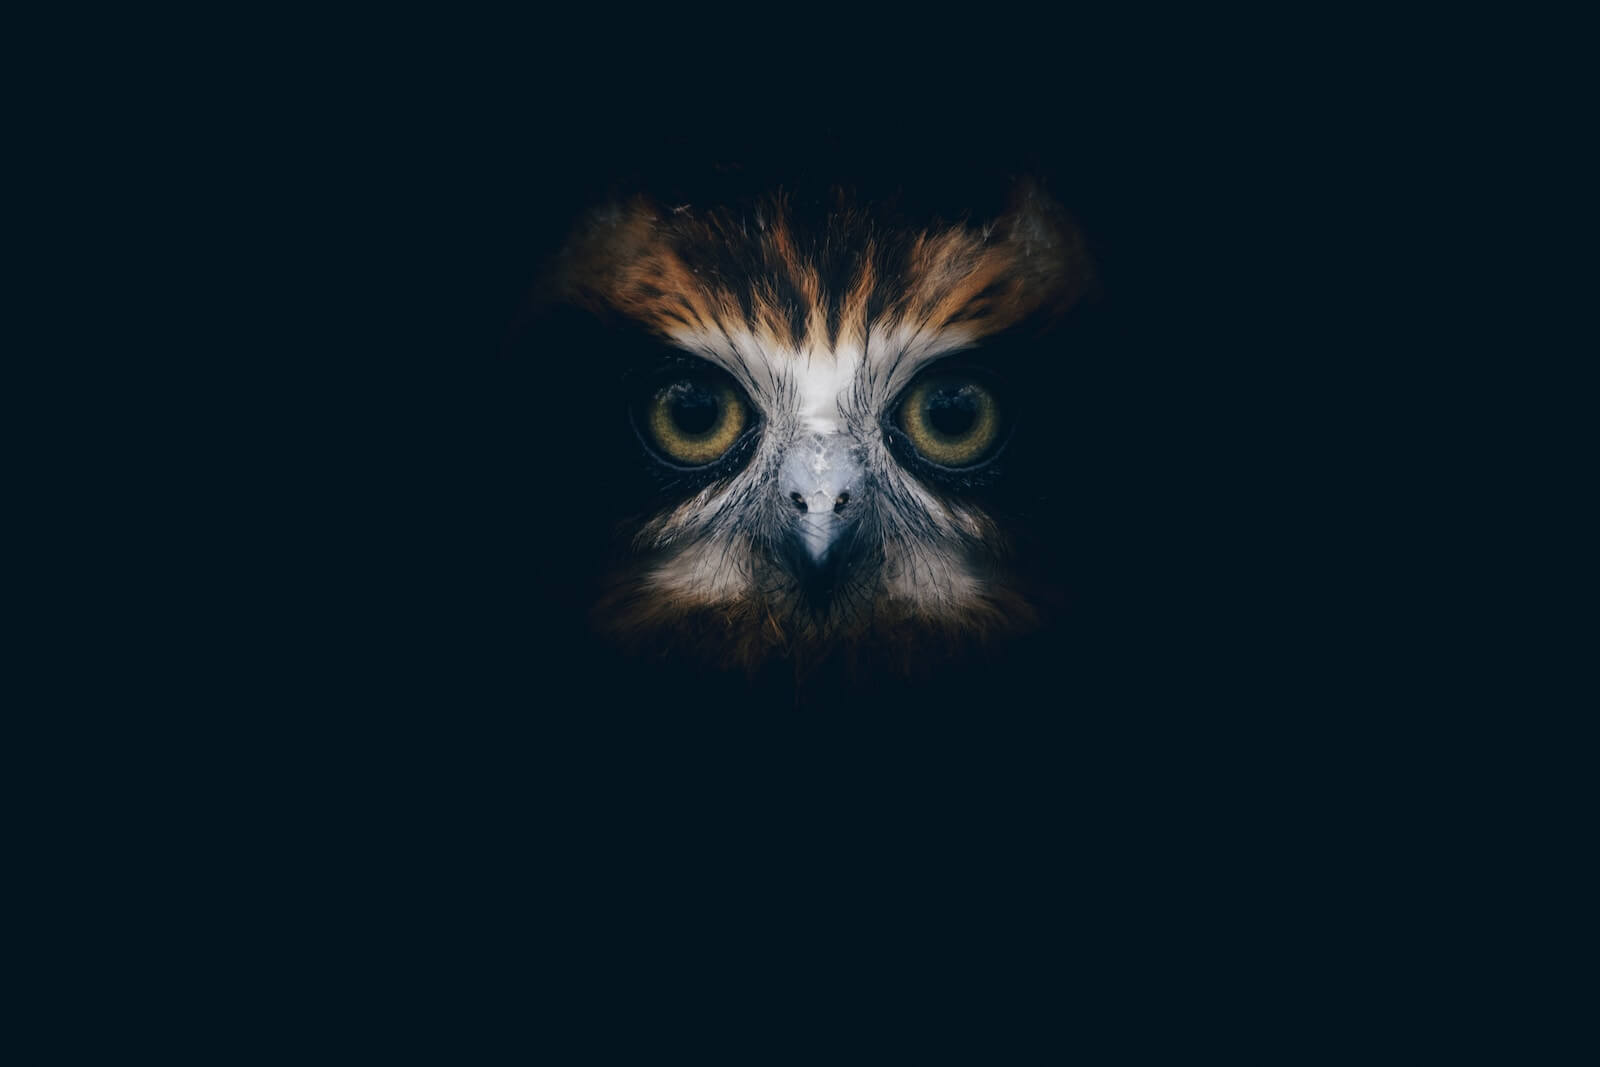 an owl's face in the dark